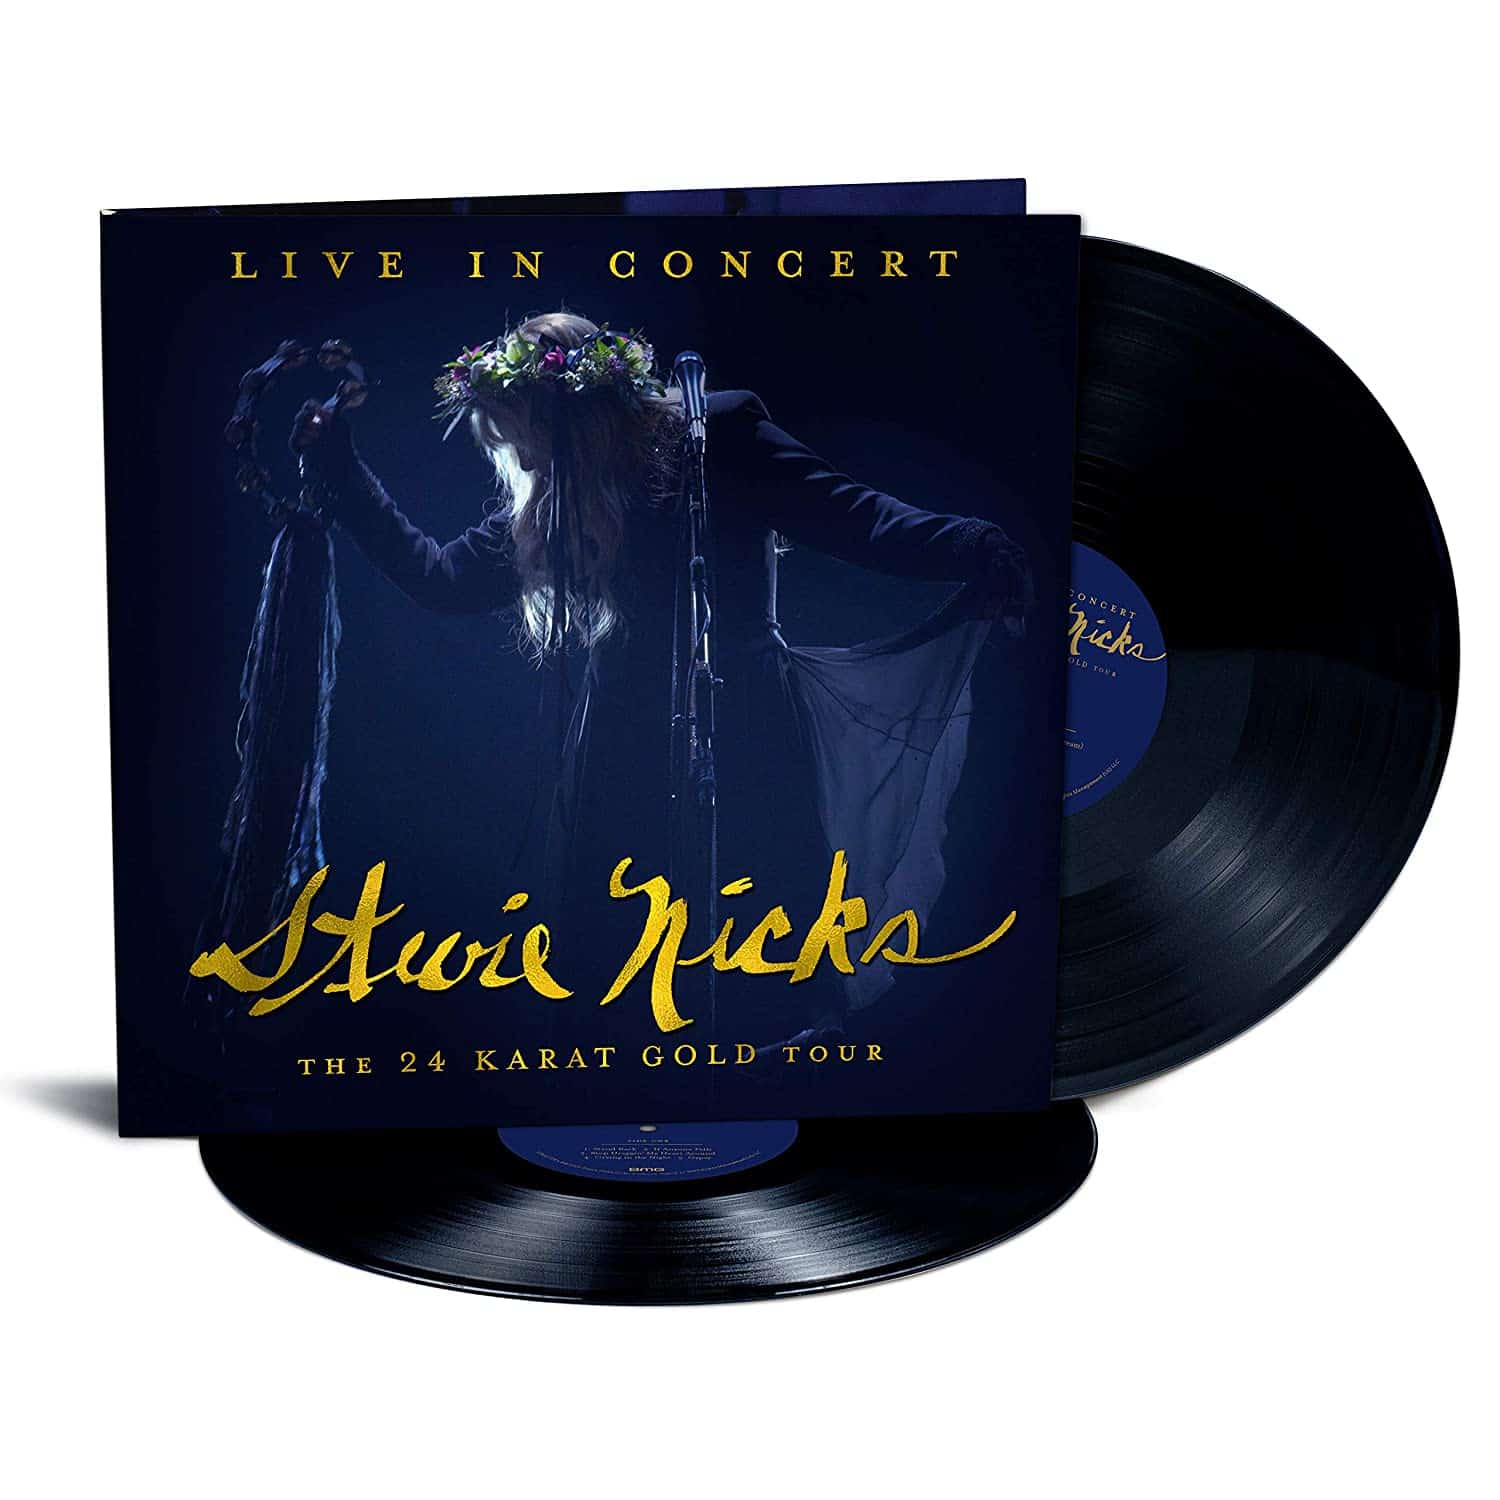 Steve-nicks-live-in-concert-the-24-karat-gold-tour-vinyl-record-album-3